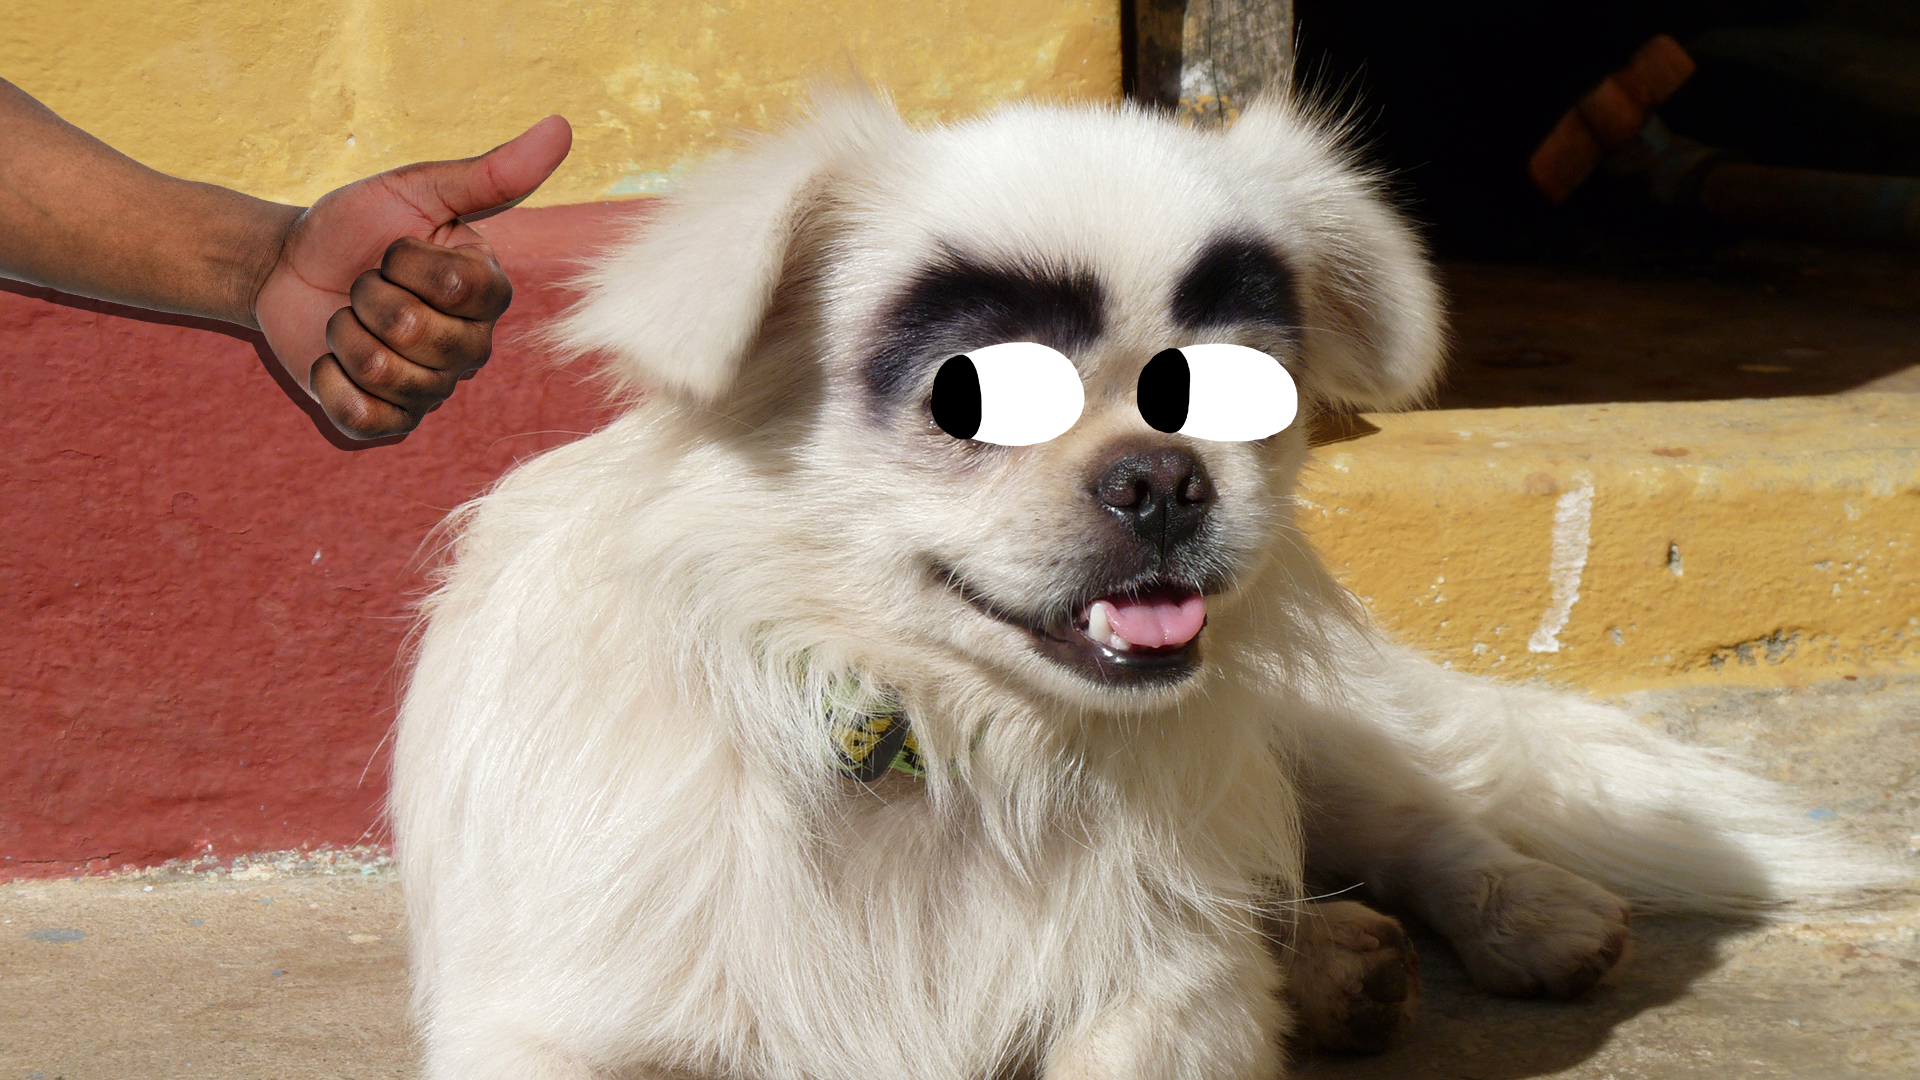 A dog with big eyebrows